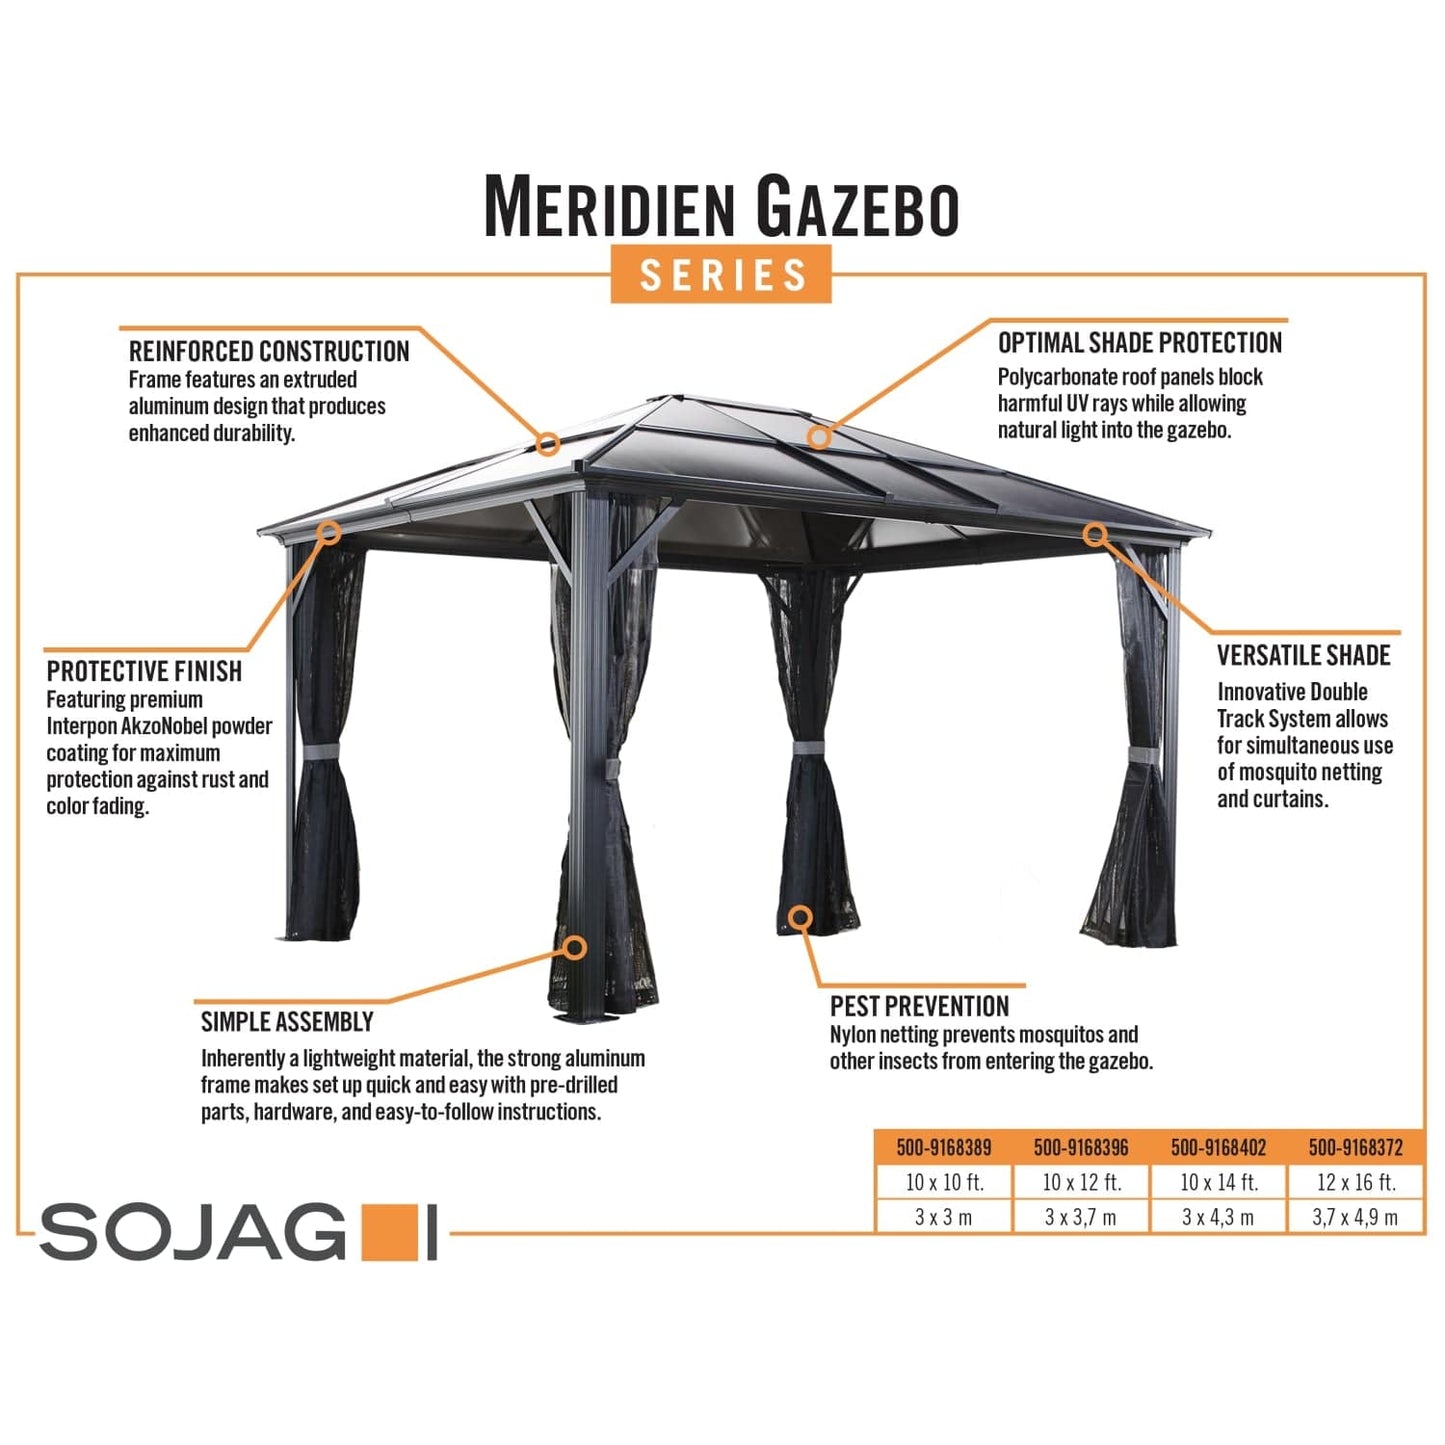 SOJAG Canopies & Gazebos Sojag | Meridien 12 ft. x 16 ft. Gazebo 500-9168372